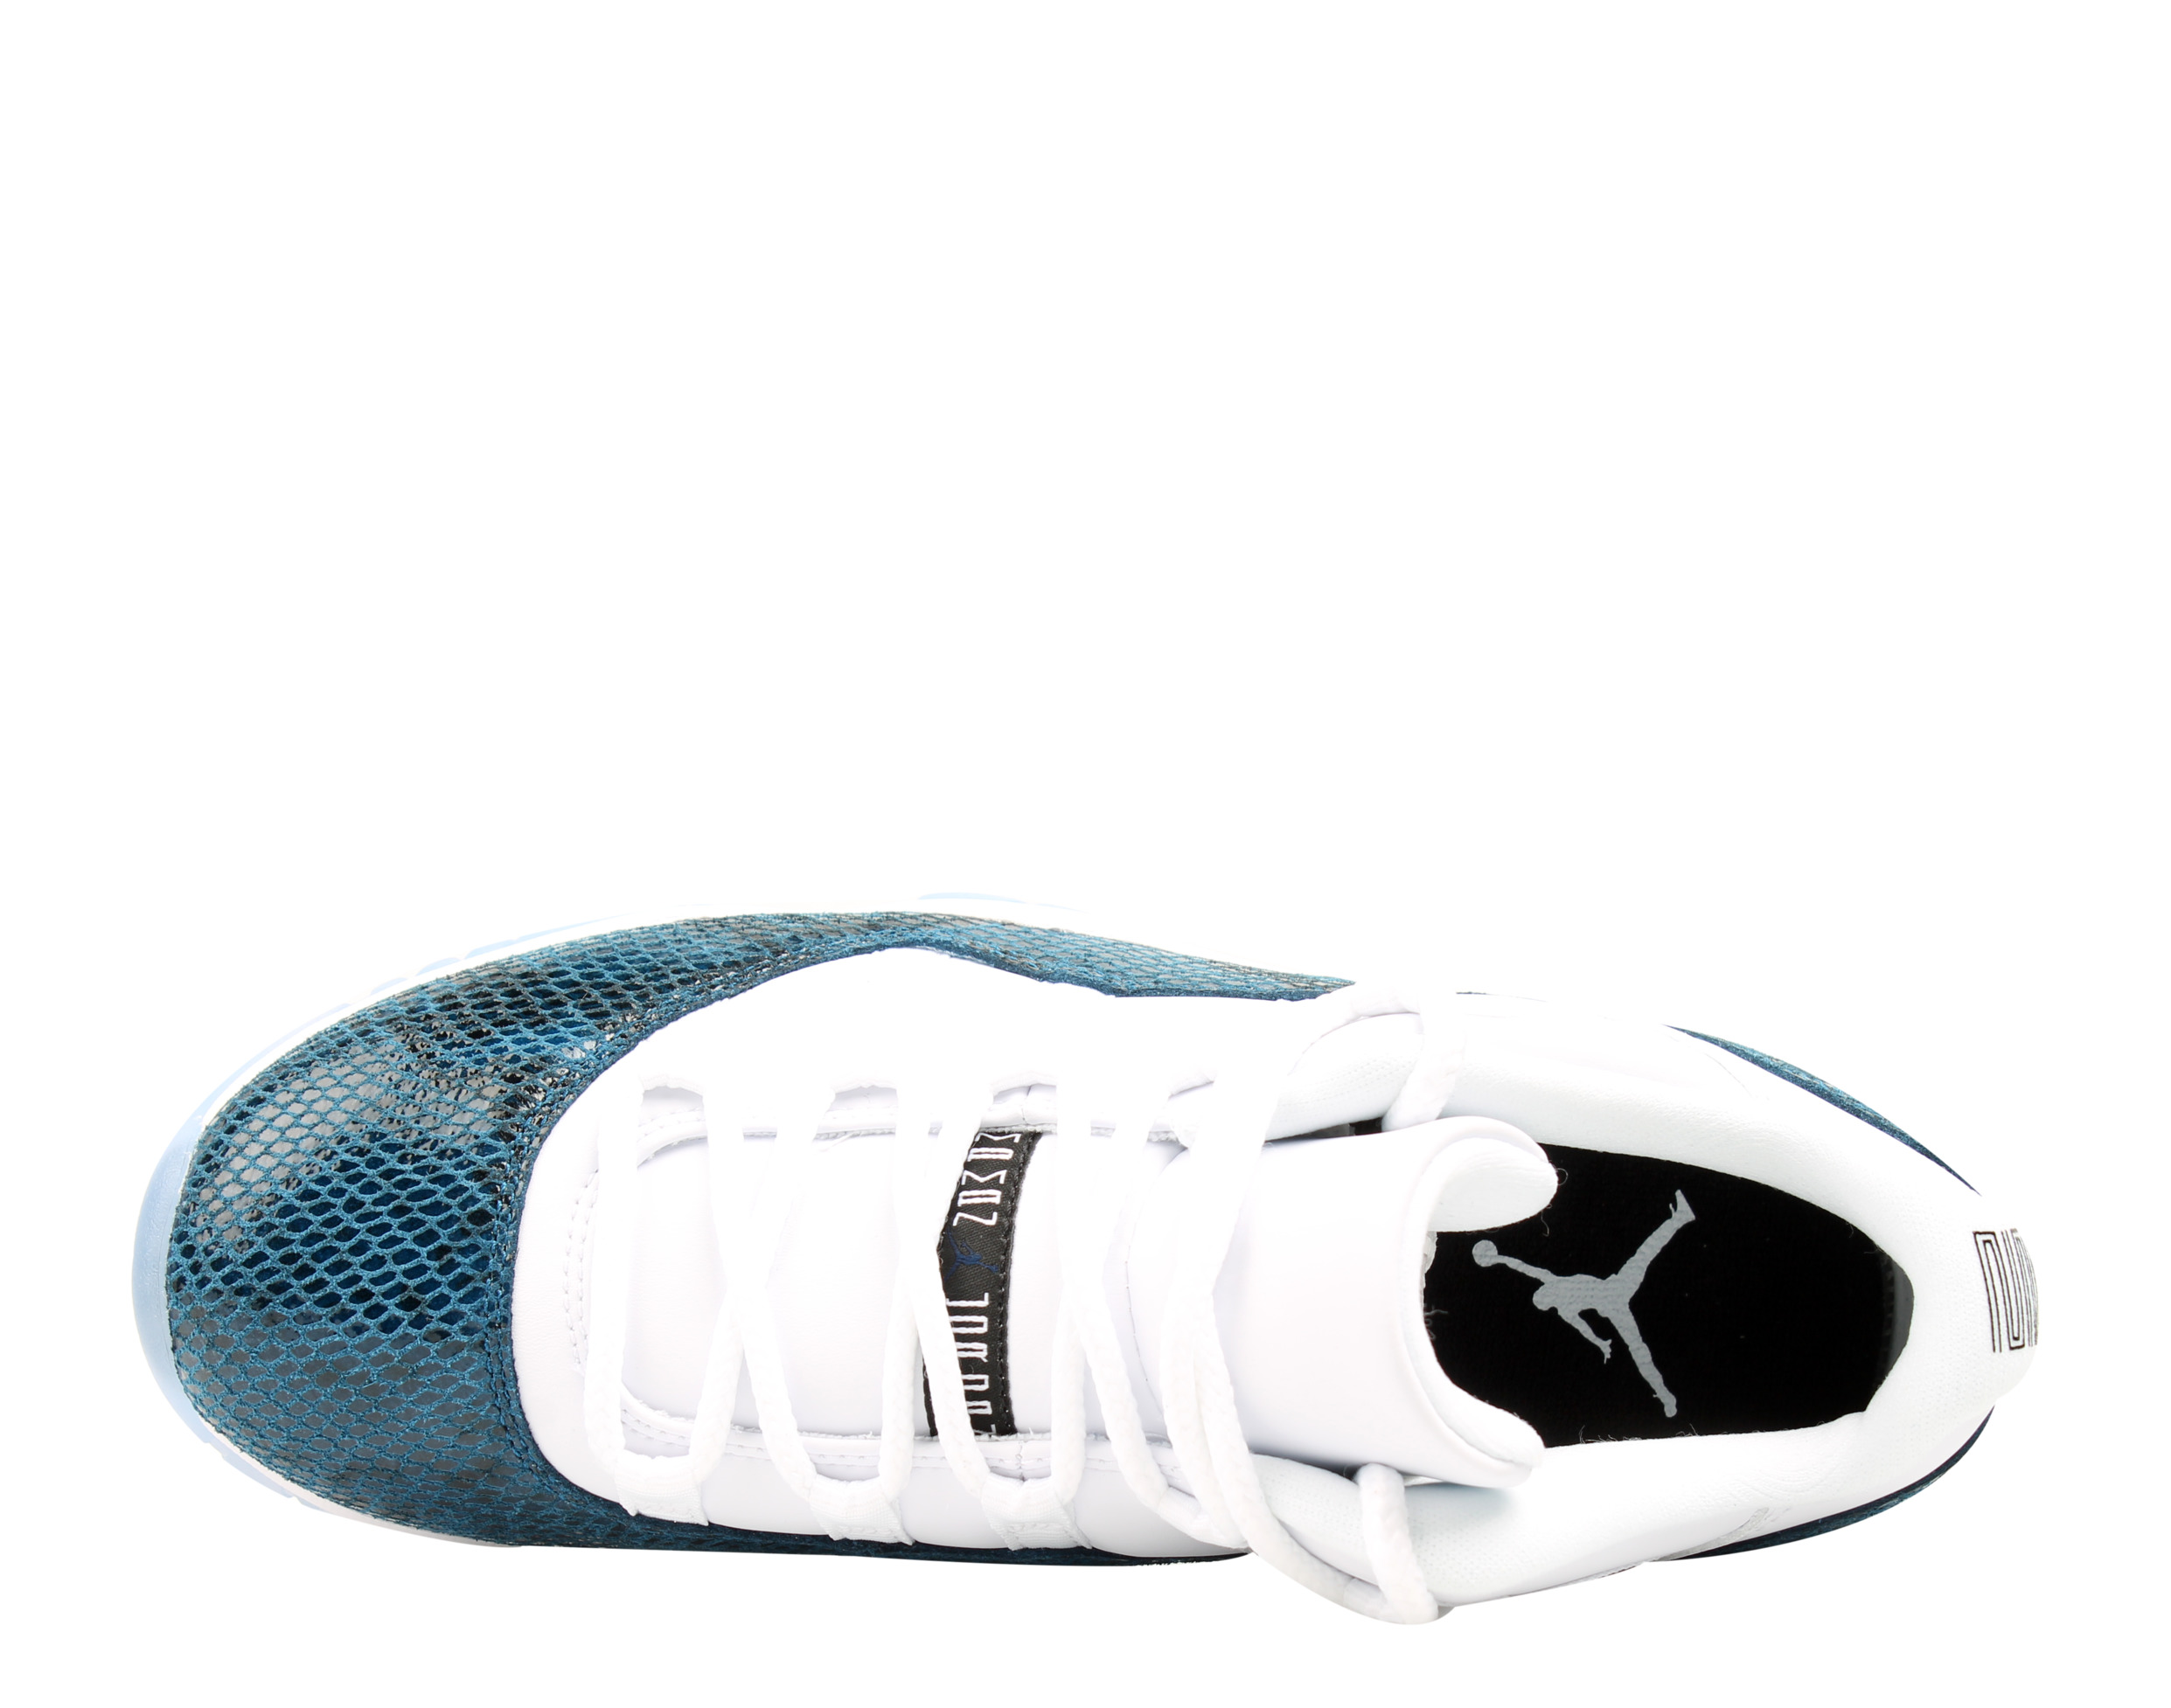 Nike Air Jordan 11 Retro Low LE Men's Basketball Shoes Size 14 - image 4 of 6